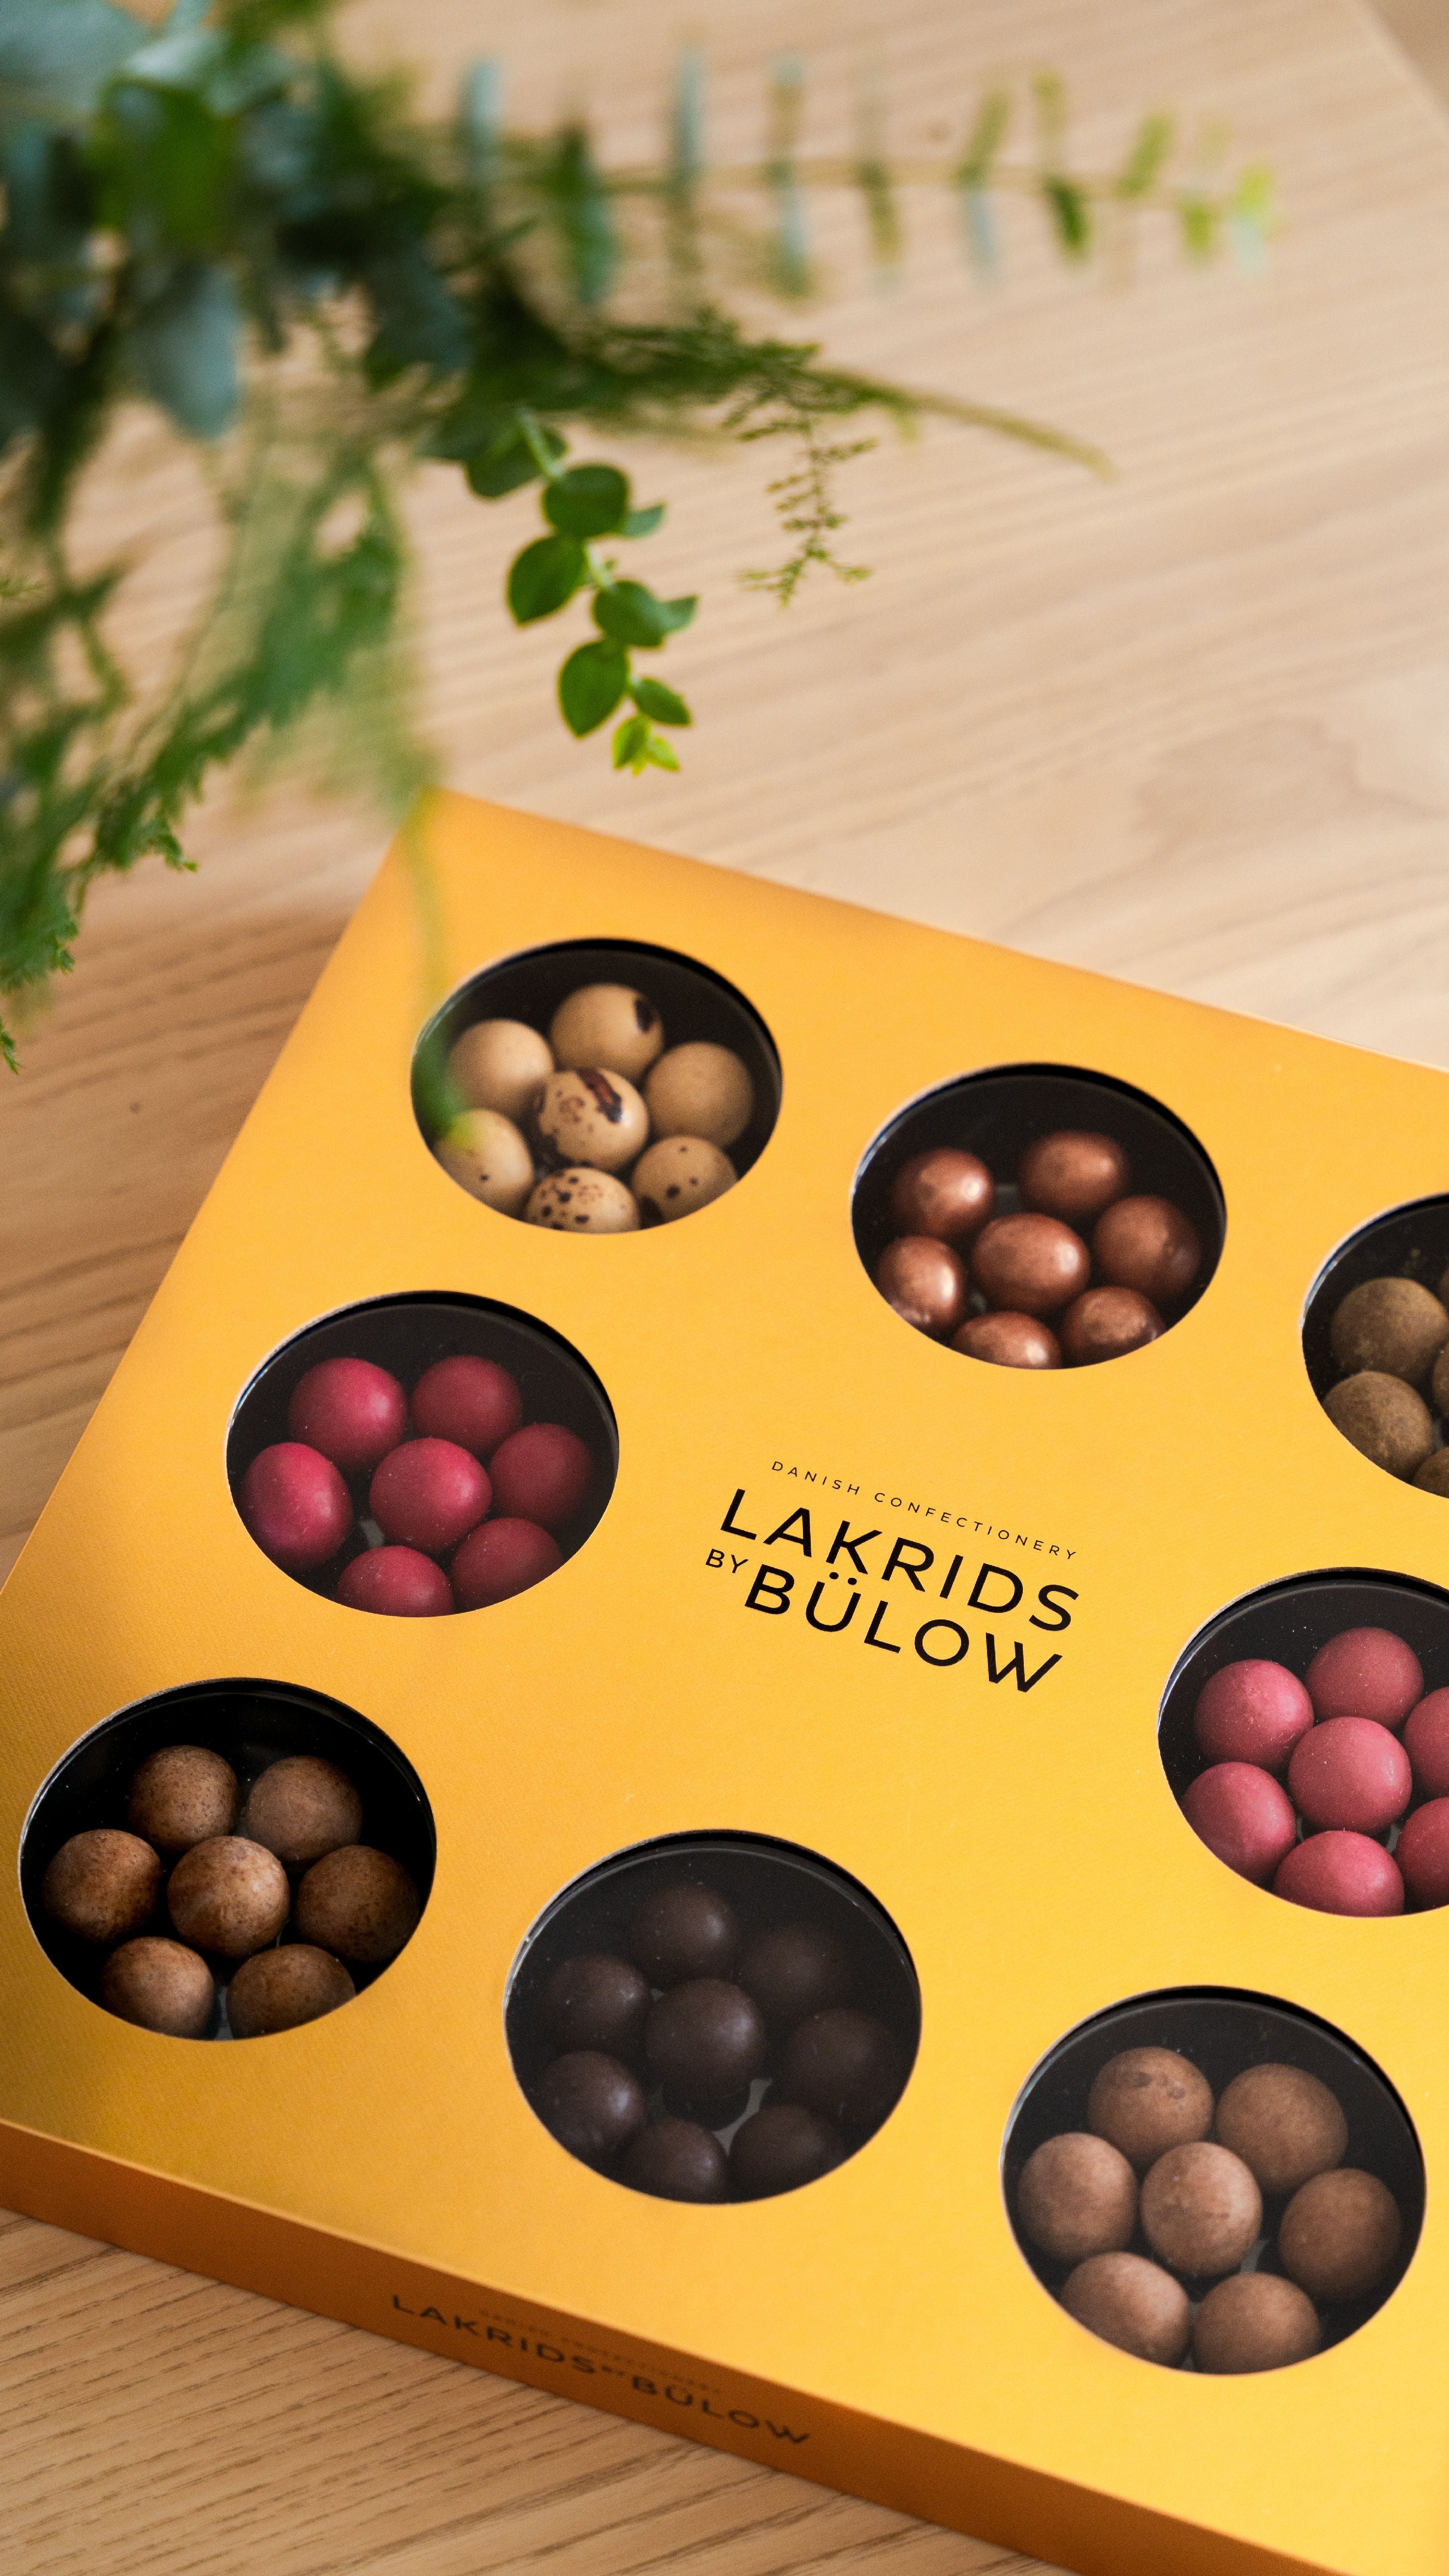 Lakrids By Bülow Winter Selection Box, 350g